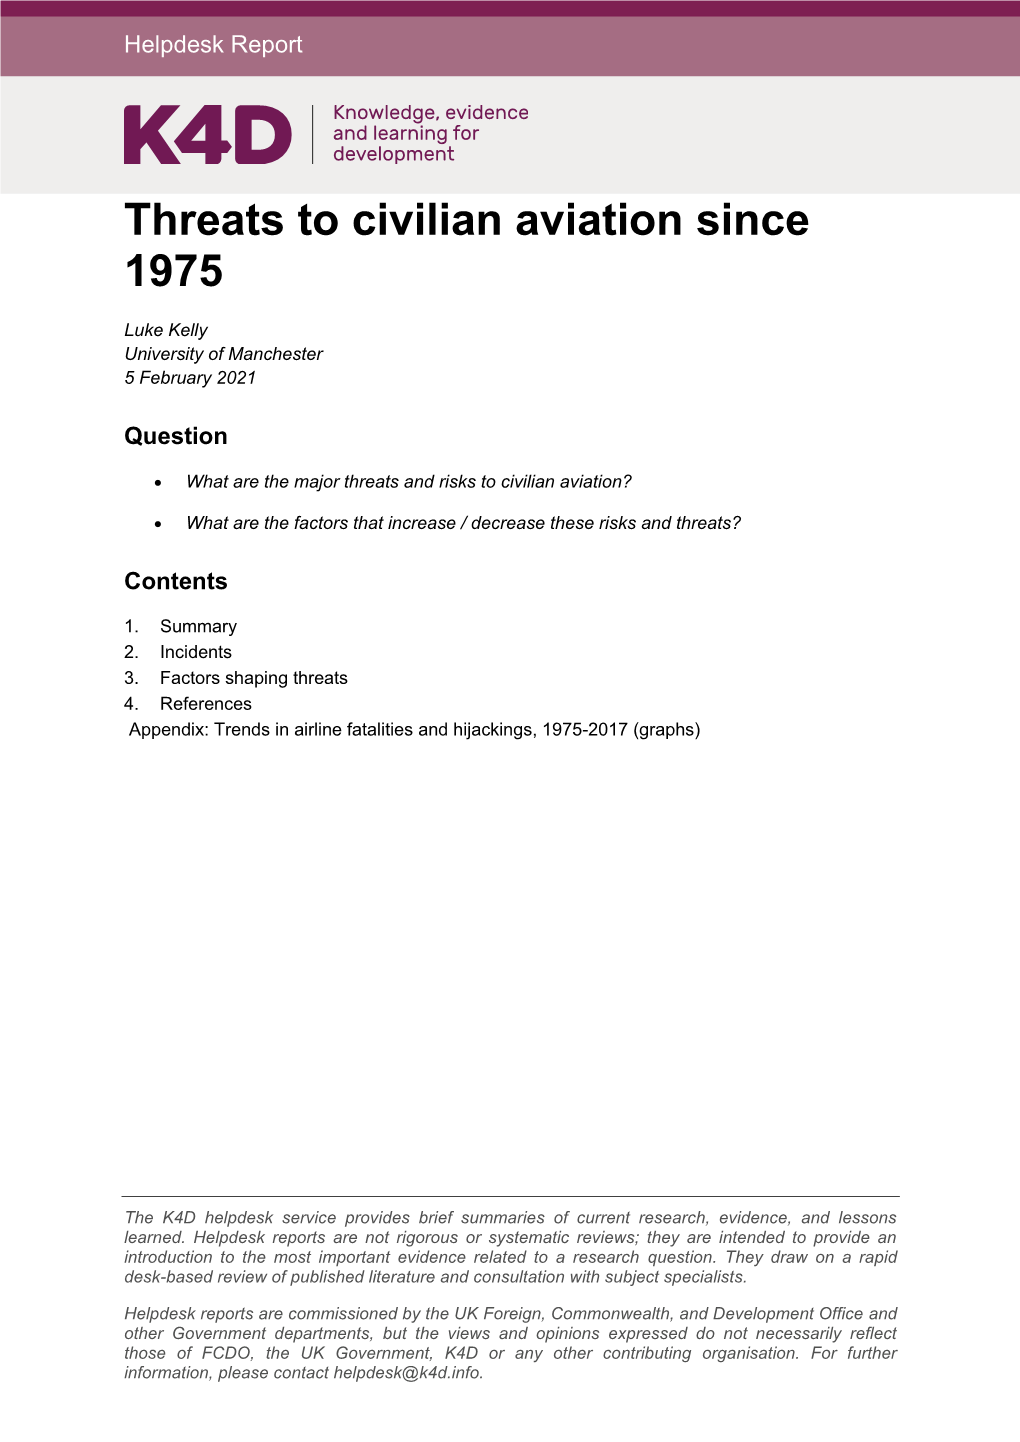 Threats to Civilian Aviation Since 1975